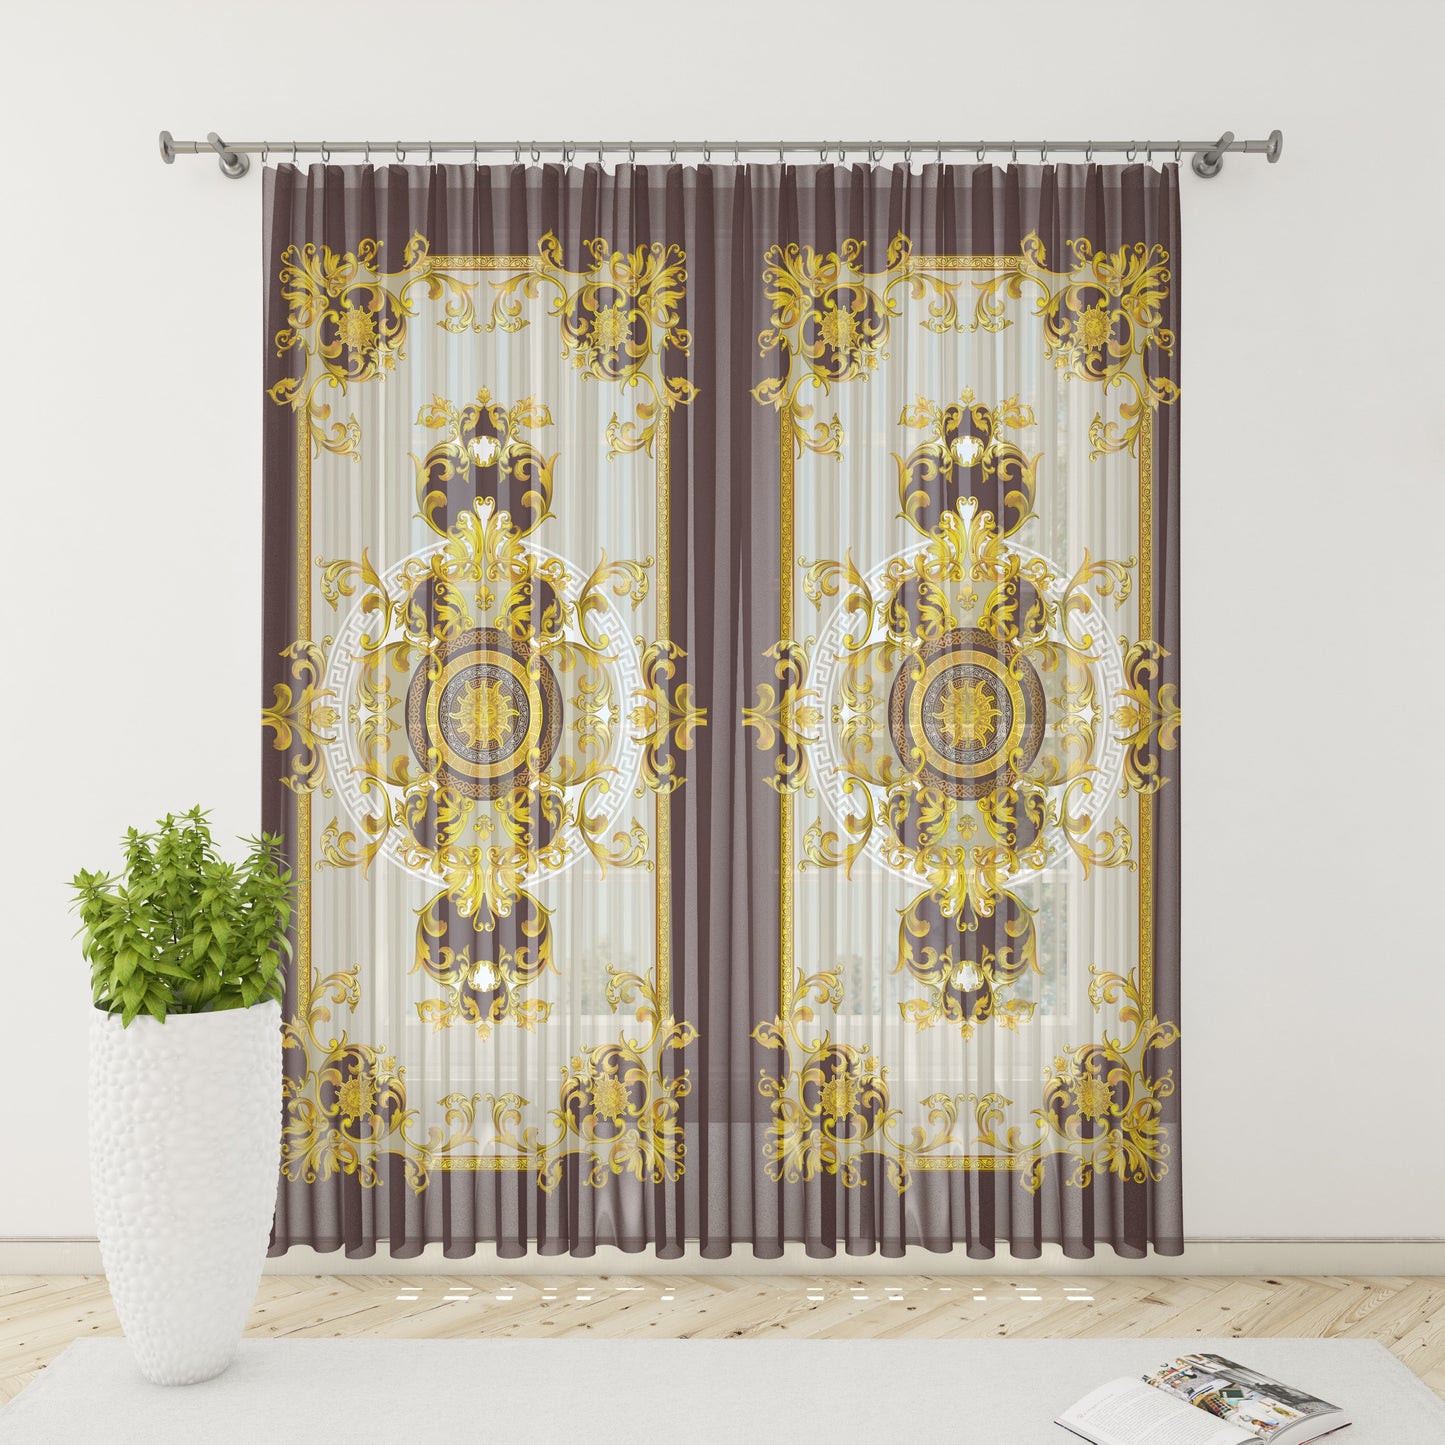 Curtains 2 PCS SET chocolate-beige gold baroque style romantic design • your LOGO • room curtains • blackout • home decor